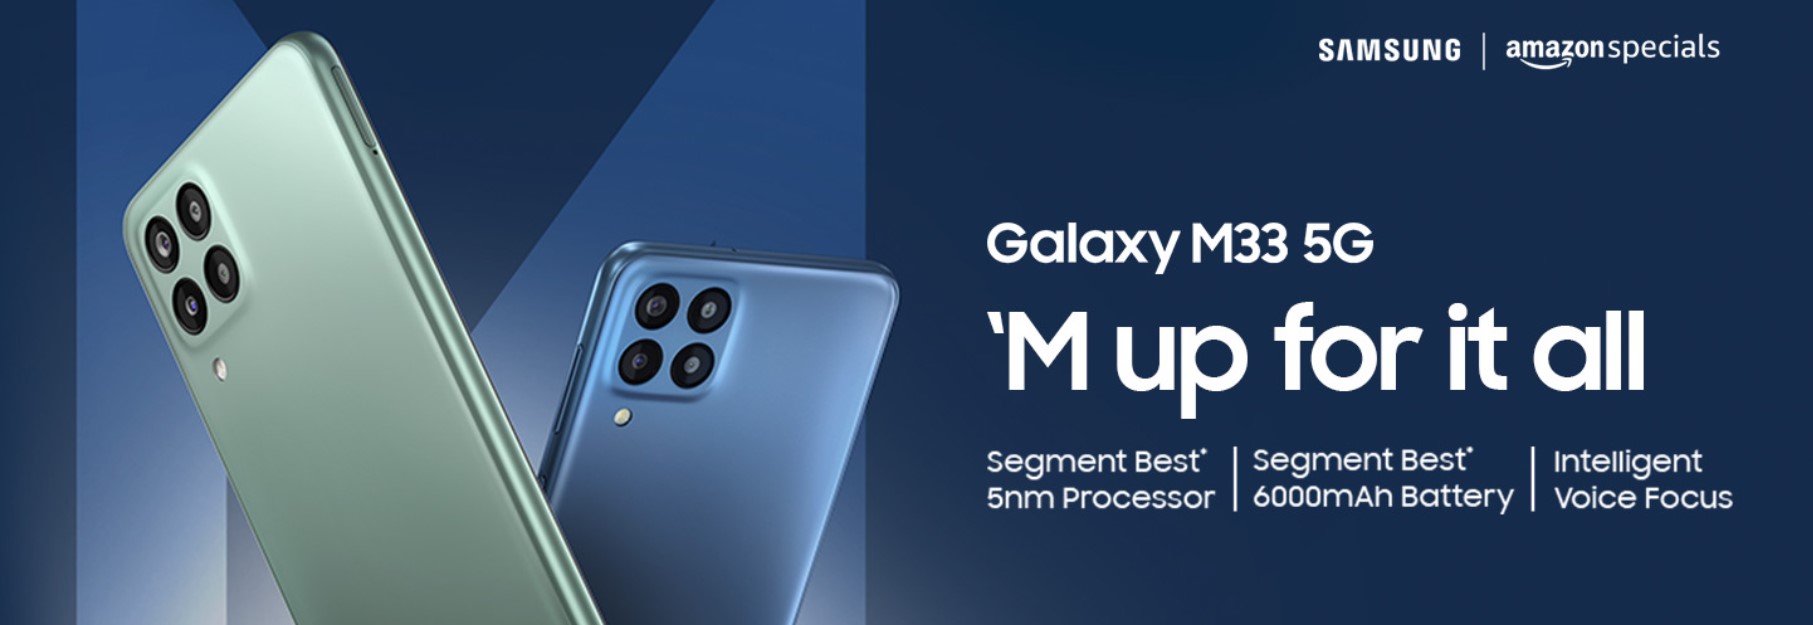 Samsung Galaxy M33 5G - Best 5G mobile under 20000 budget in India